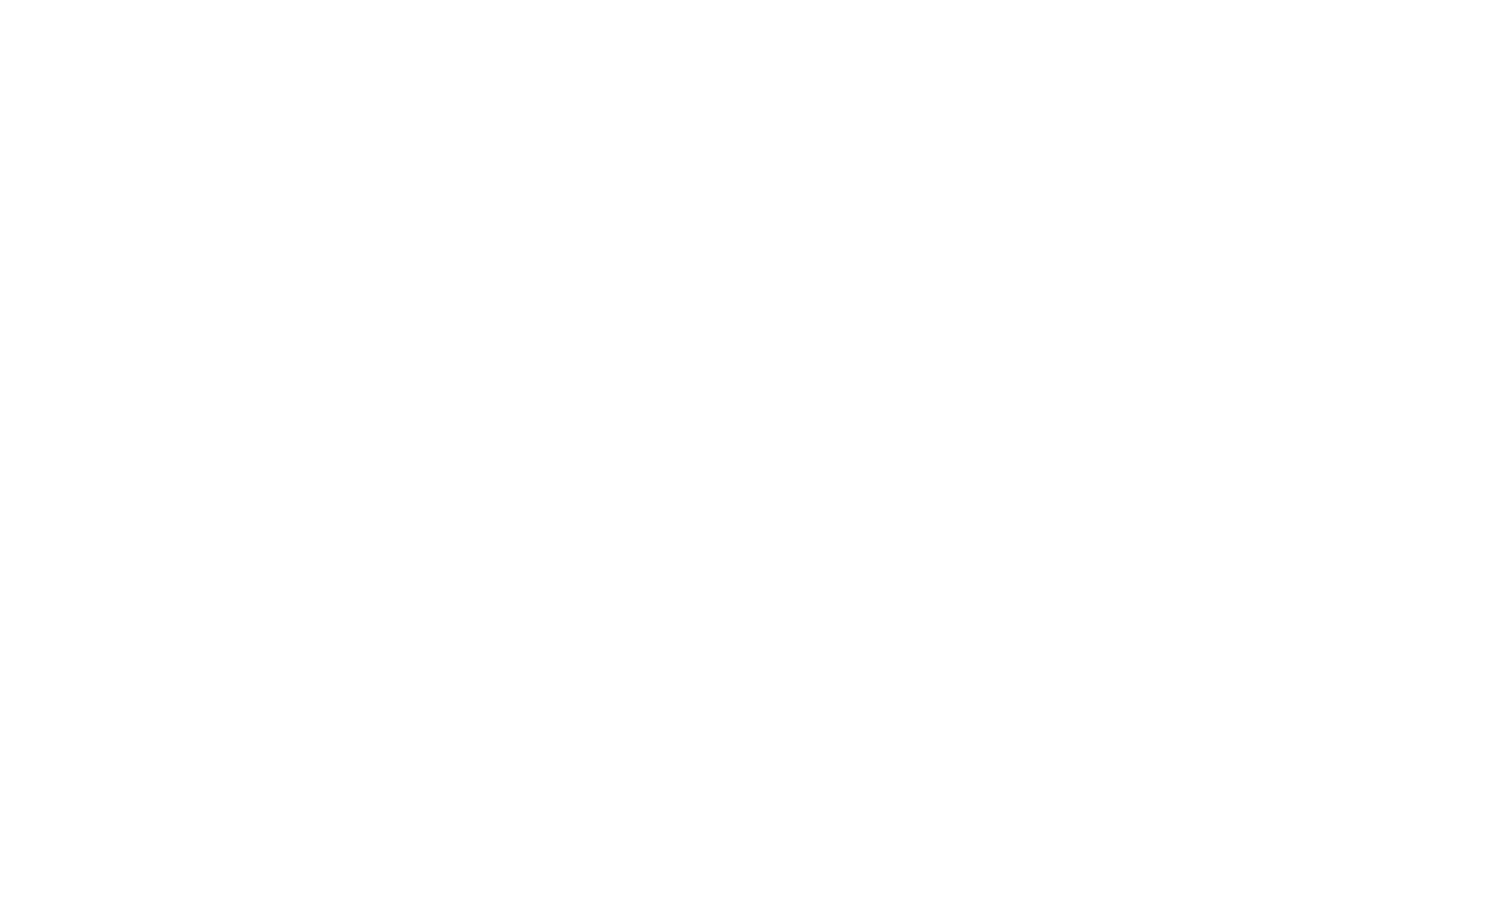 Essex Art Center